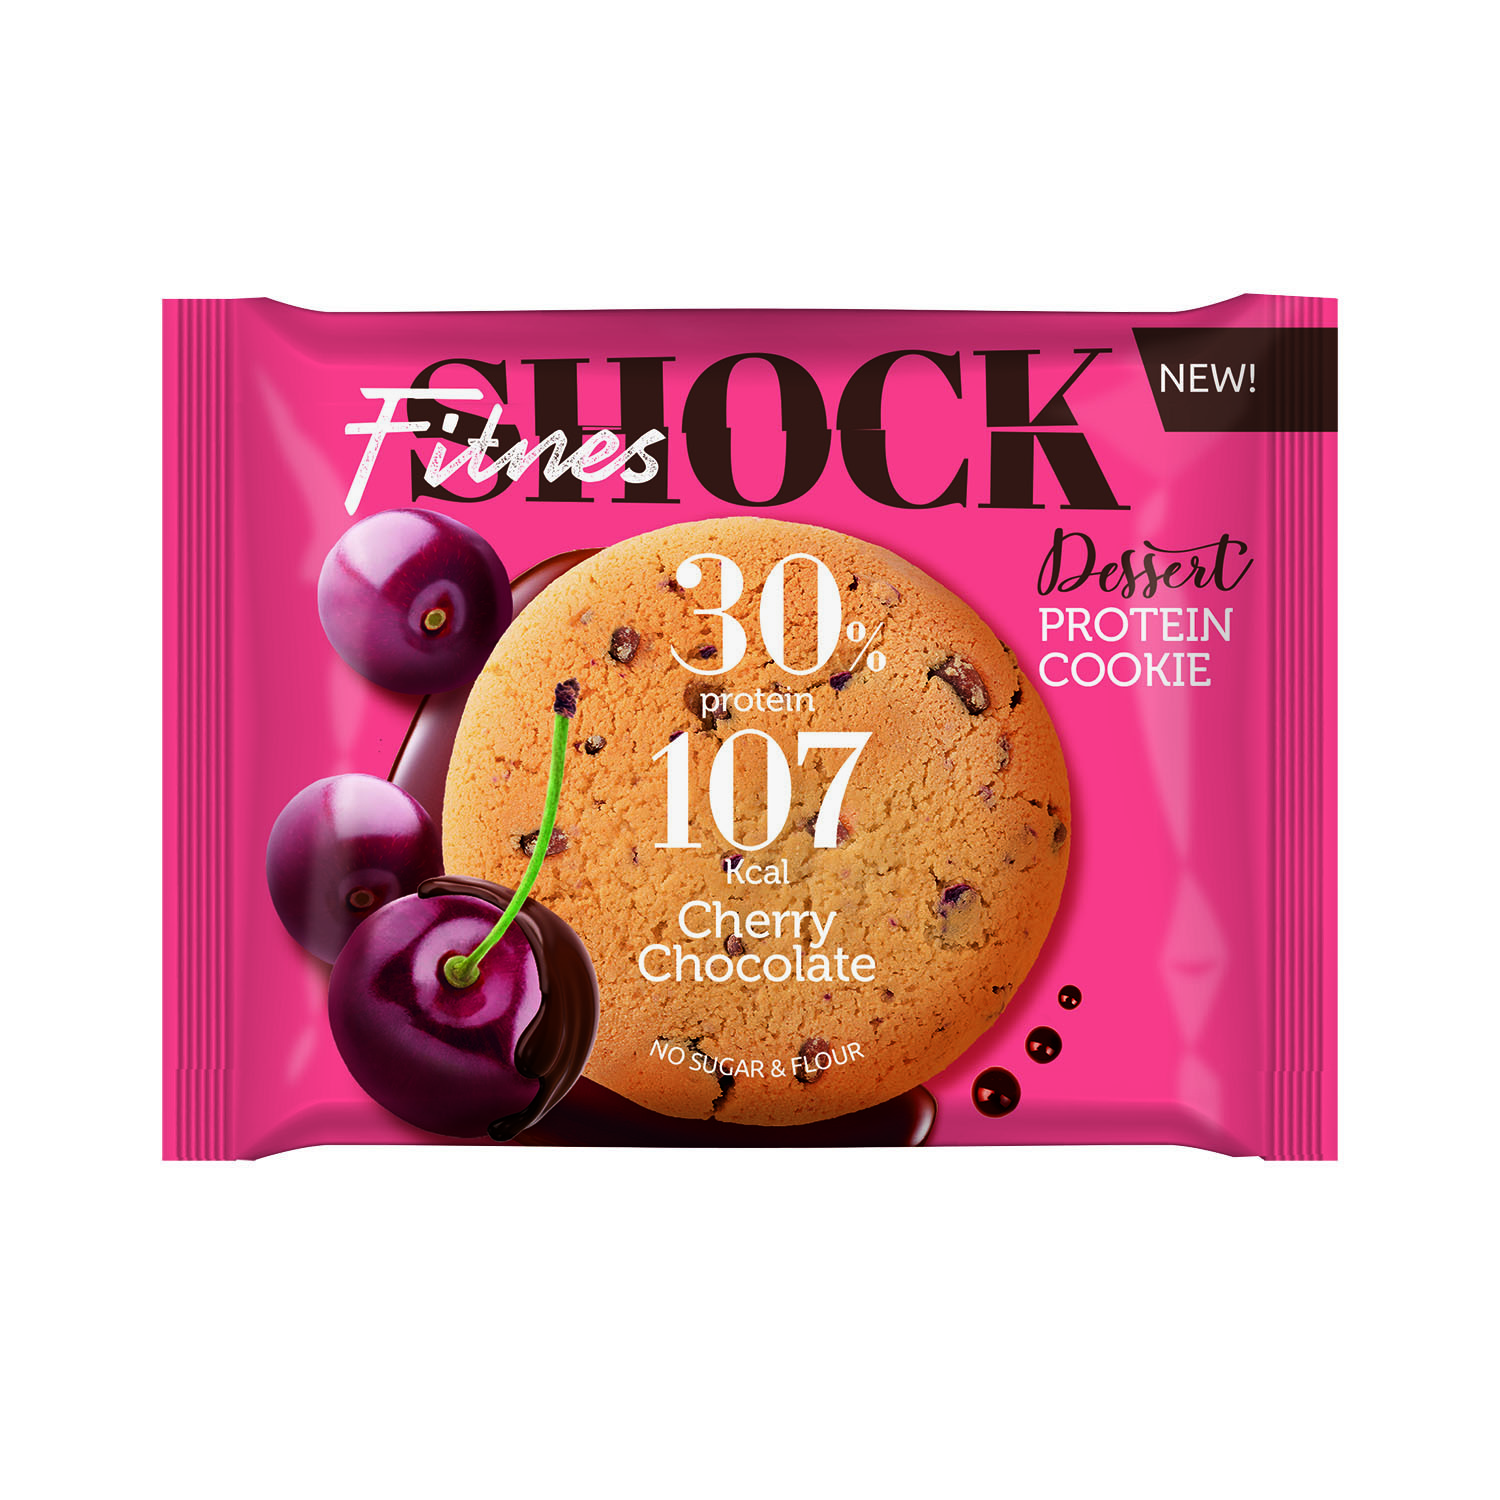 Shock печенье. Fitnesshock Protein cookie Dessert вишня- шоколад 35г. Fitnesshock печенье. Протеиновое печенье Shock. Протеиновое печенье с вишней.